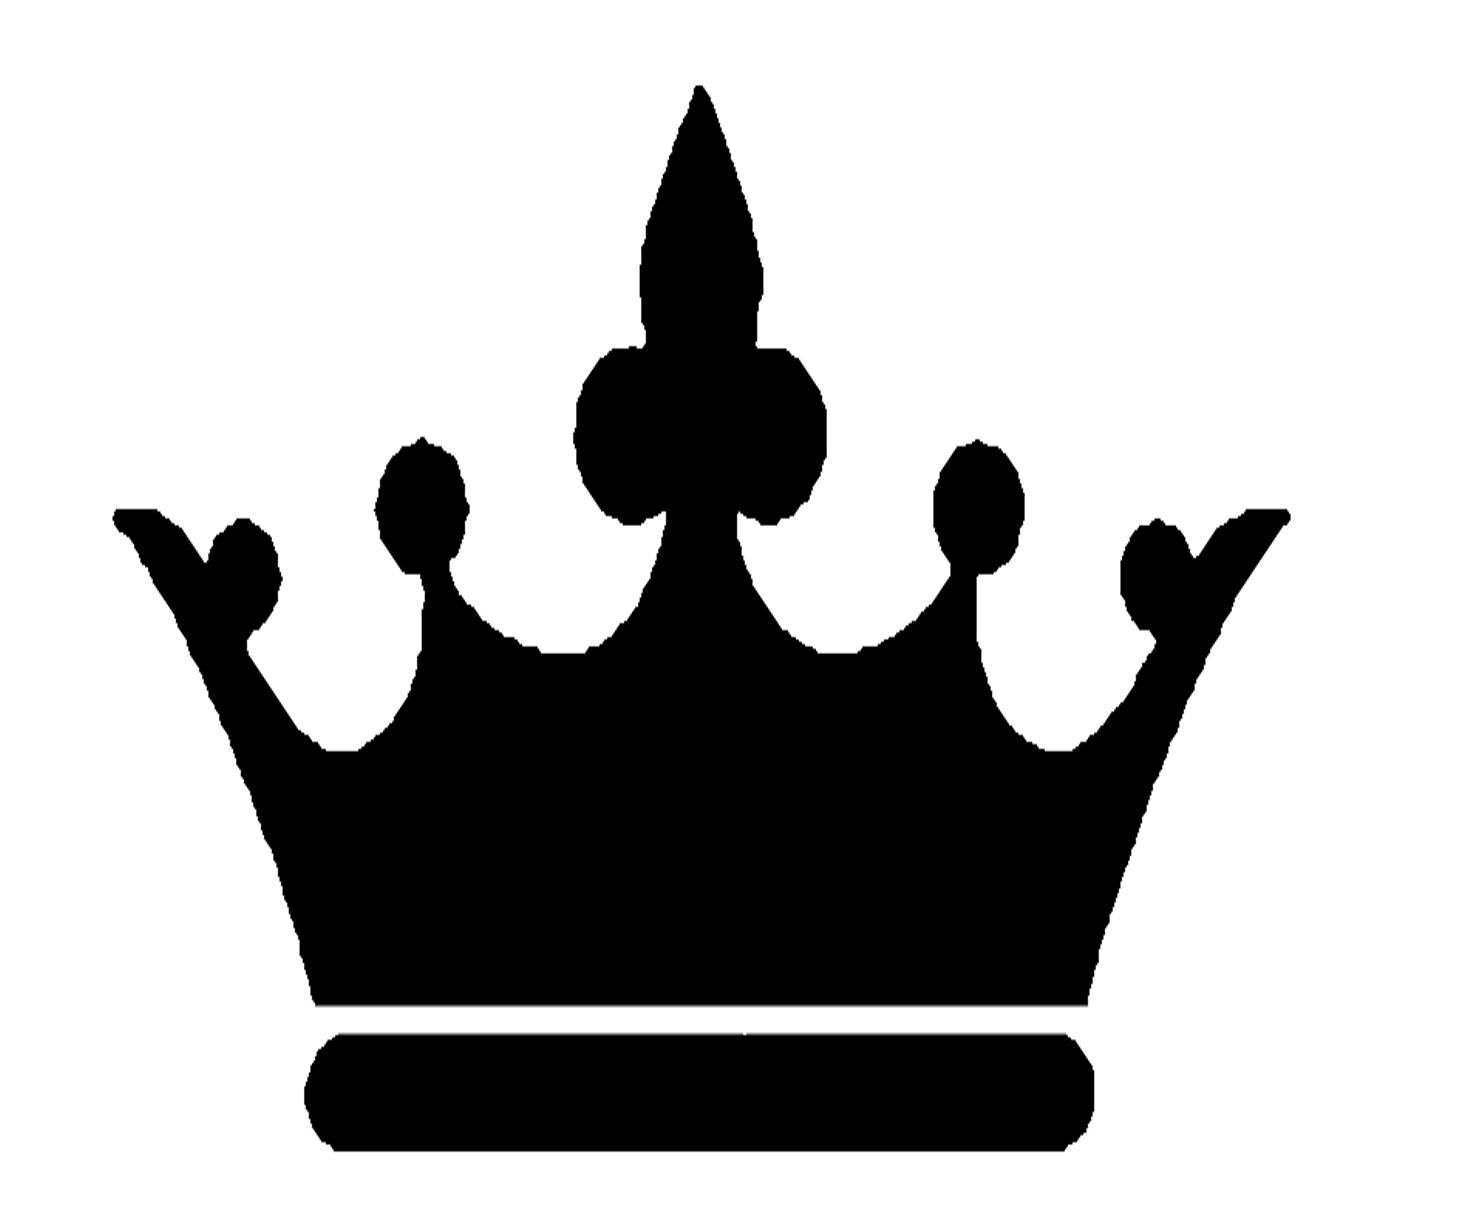 King Crown Clip Art - Tumundografico